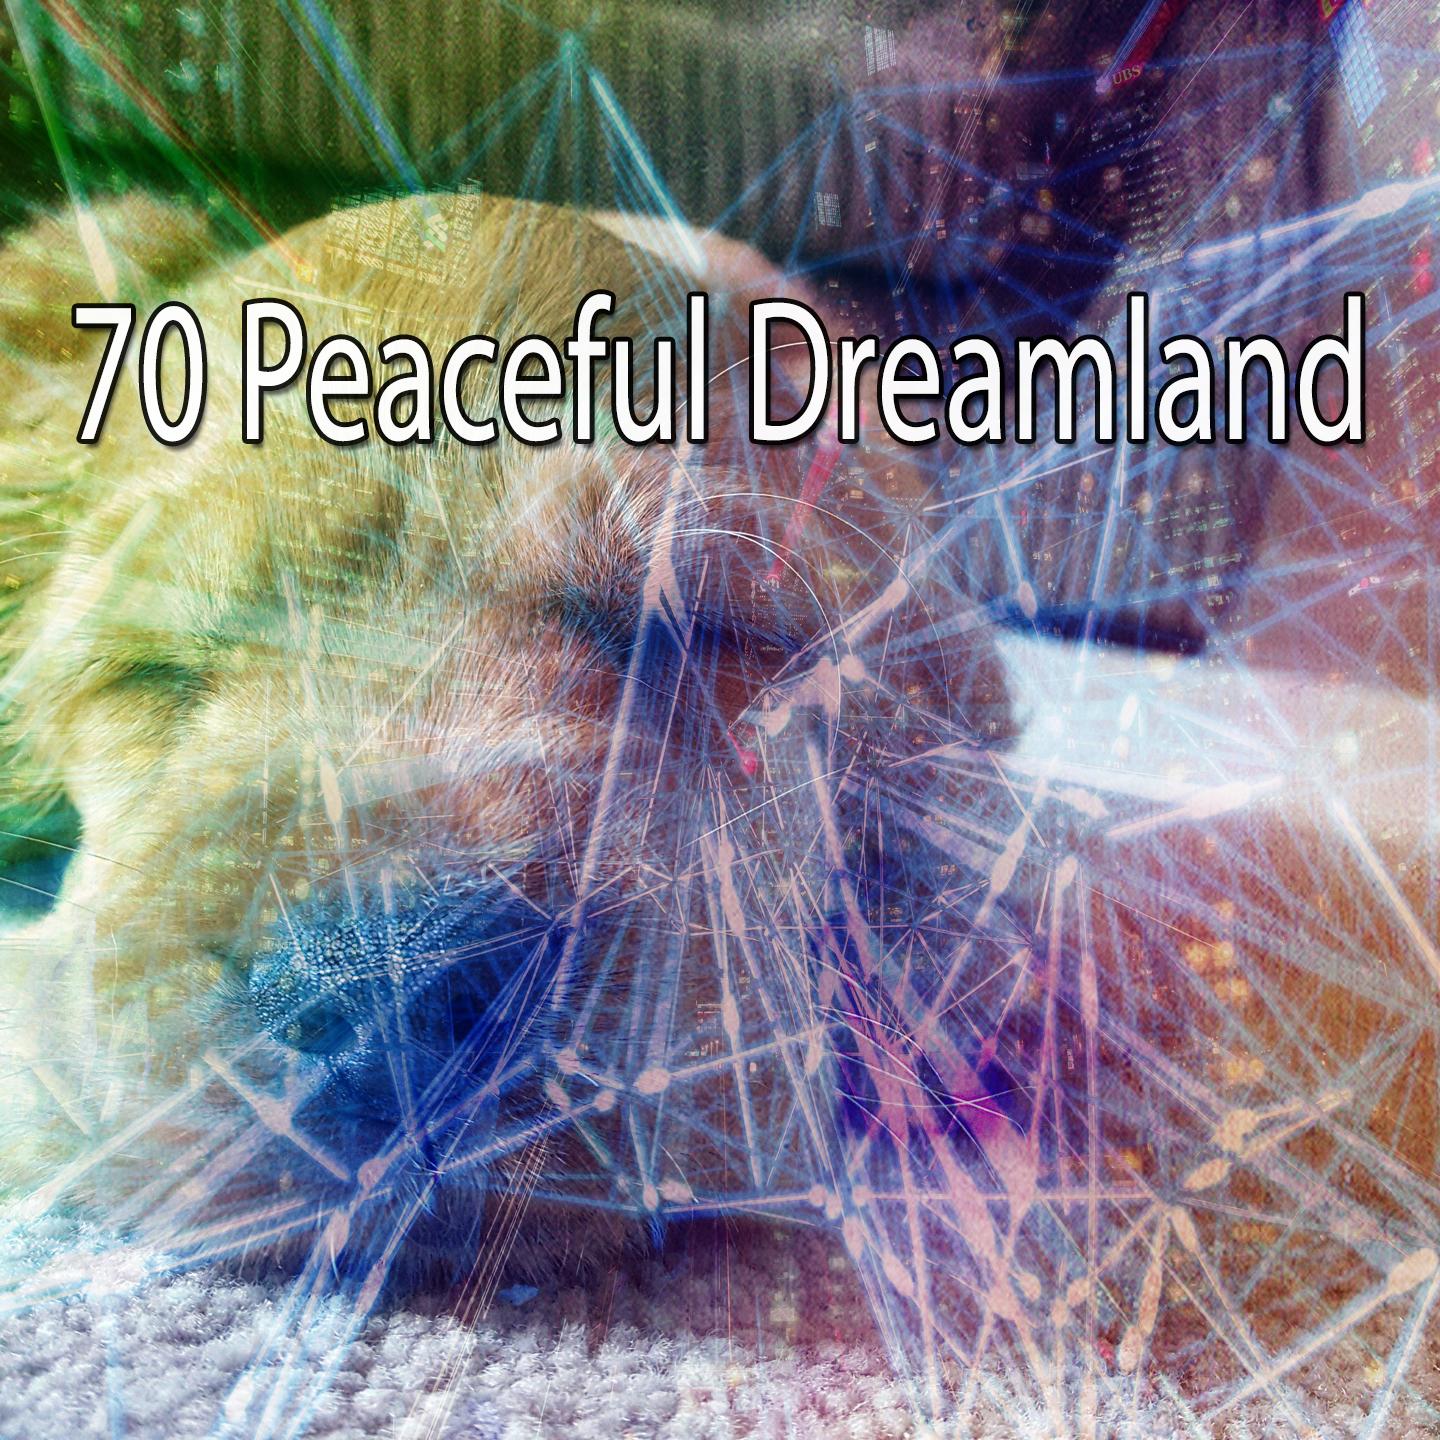 70 Peaceful Dreamland